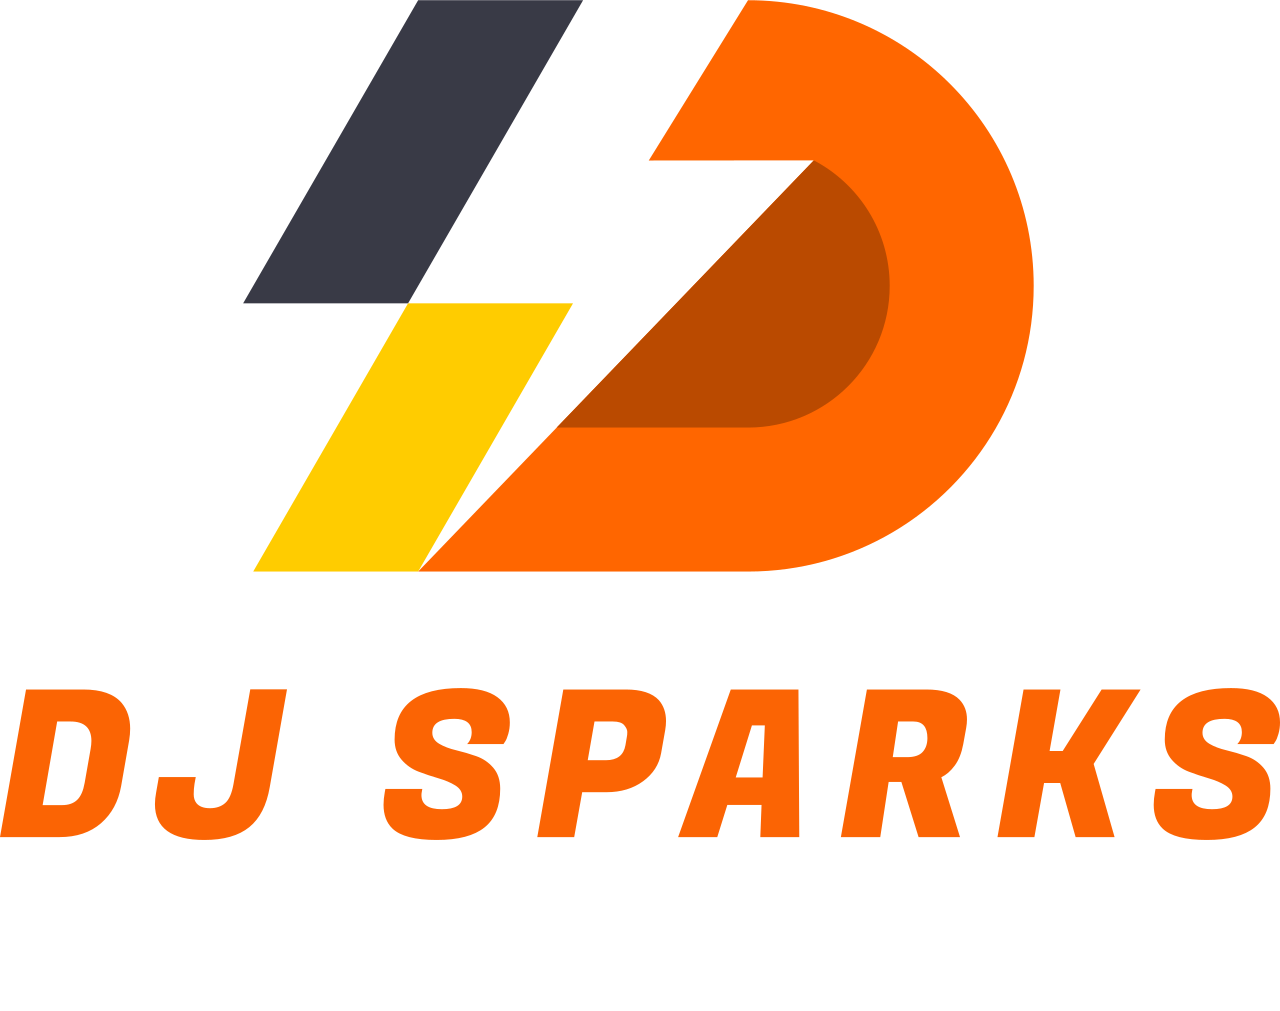 DJ Sparks's logo